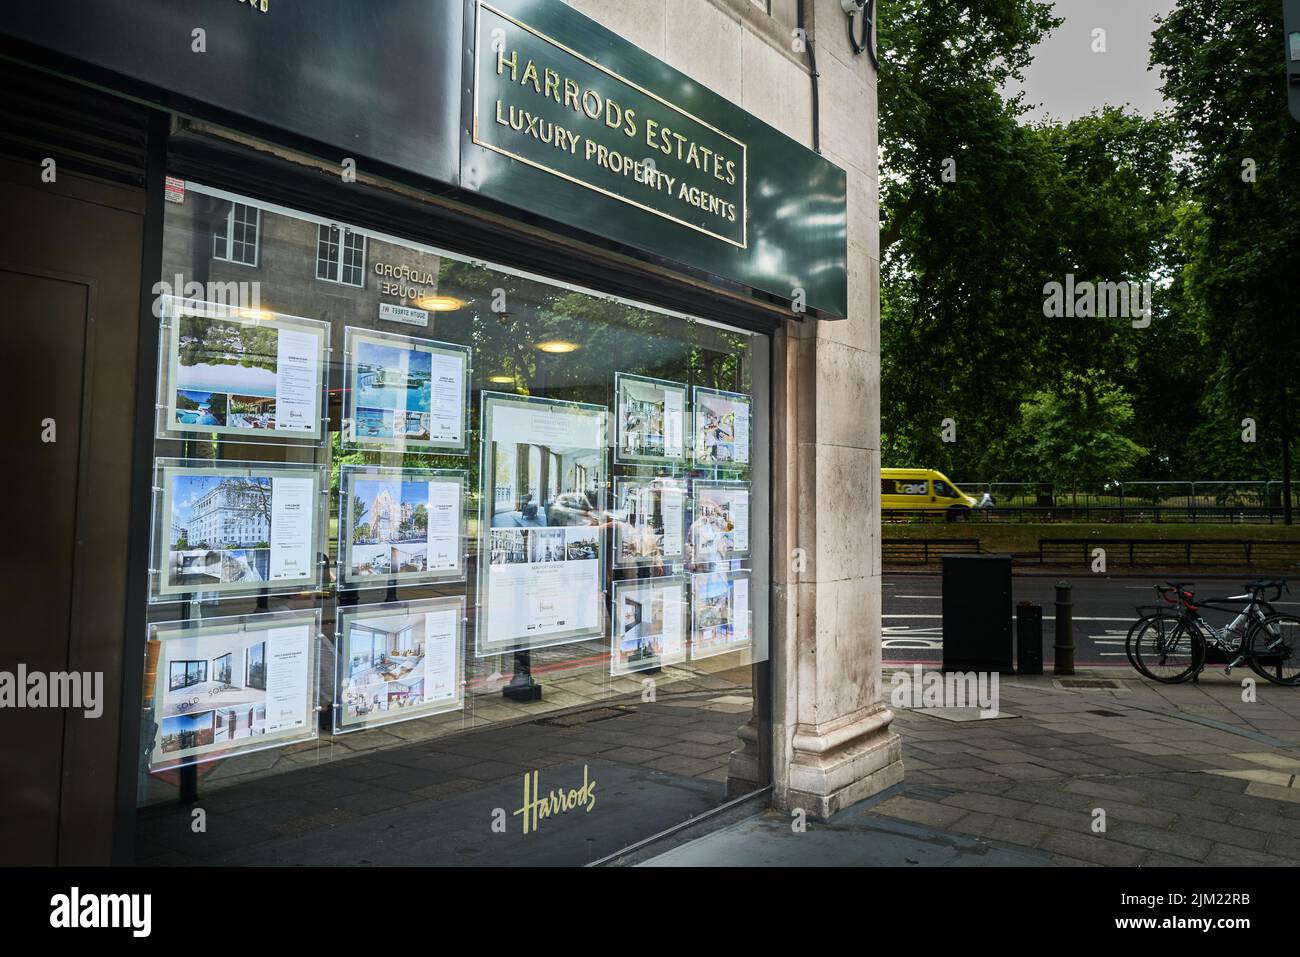 Harrods estates luxury property agents shop, Park Lane, Mayfair, London, England. Stock Photo